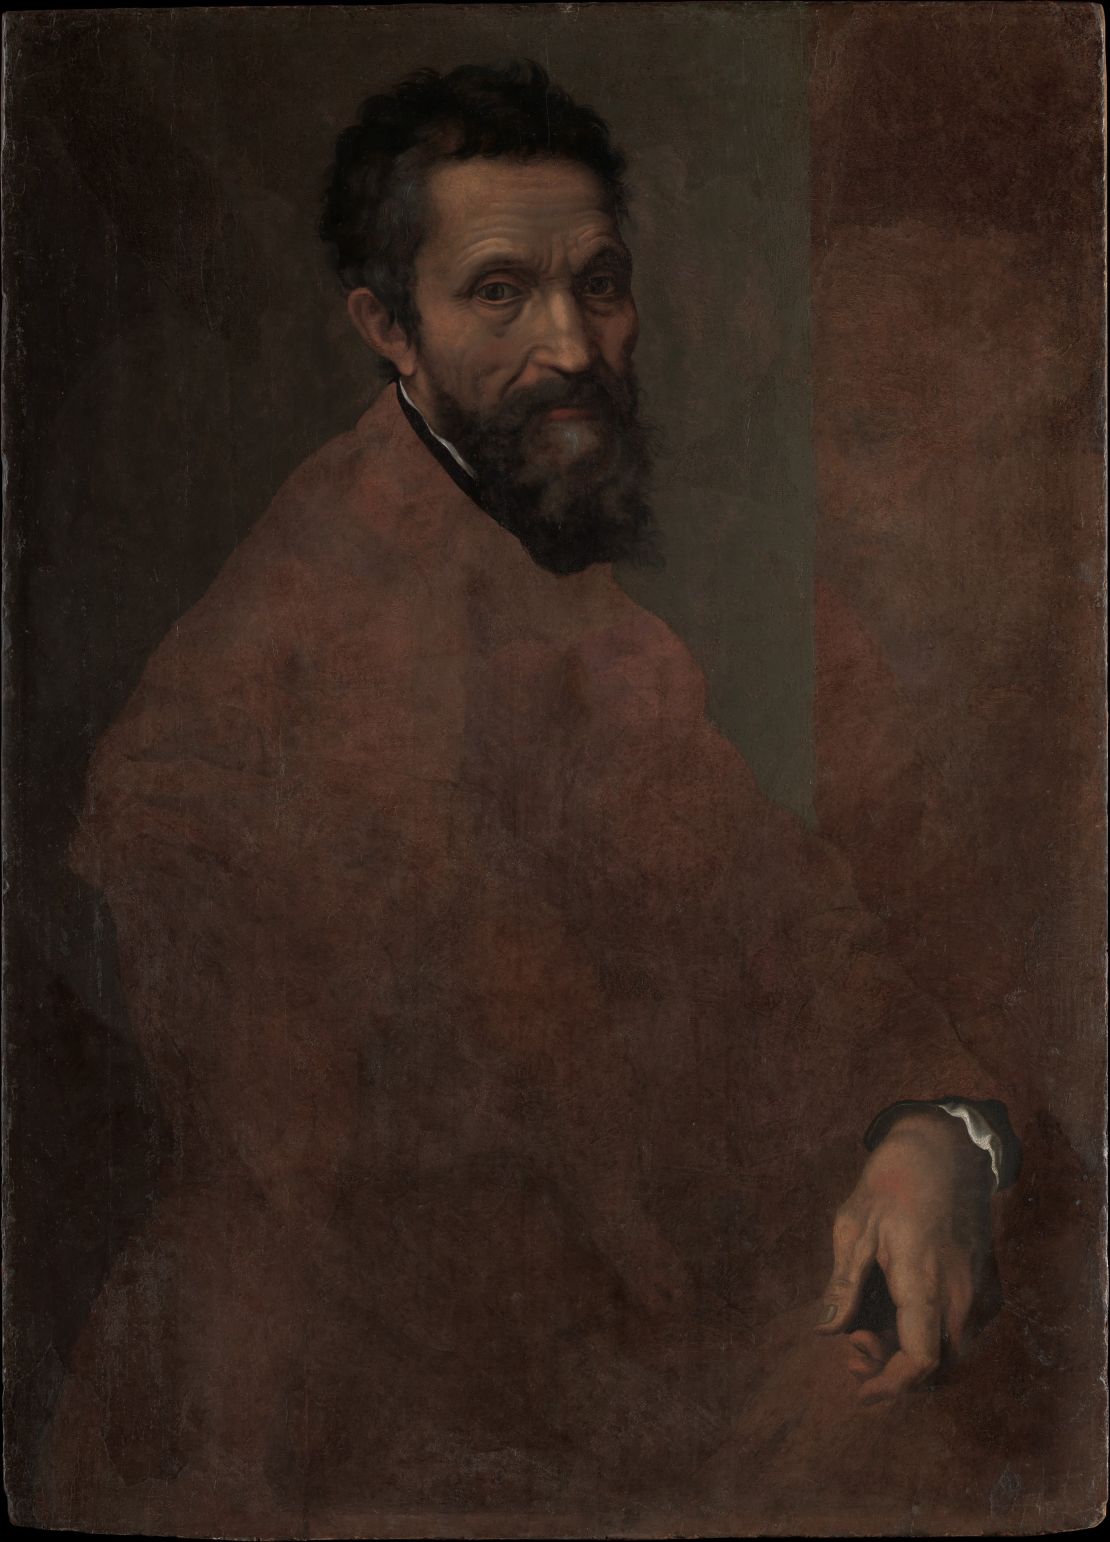 An unfinished portrait of Michelangelo by Daniele da Volterra dating from around 1544.